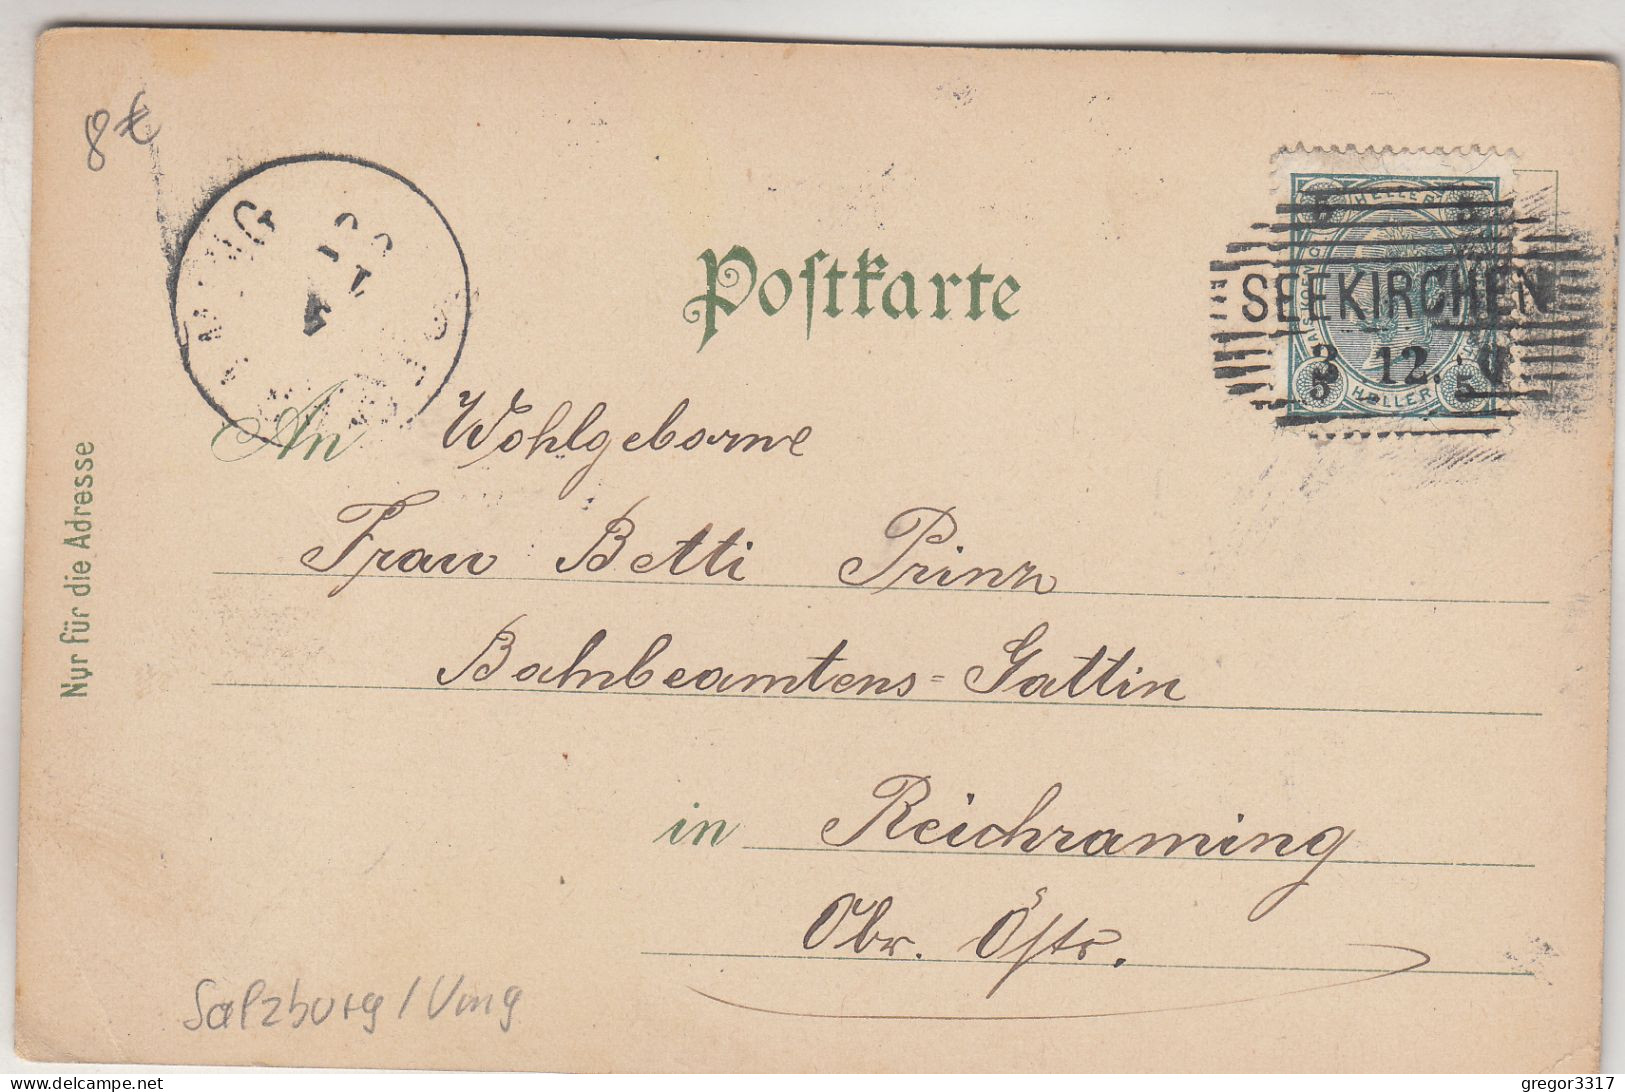 C7419) GRUSS Aus SEEKIRCHEN - LITHO - Wilhelm Nitsch - 3.12.1900 !! - Seekirchen Am Wallersee